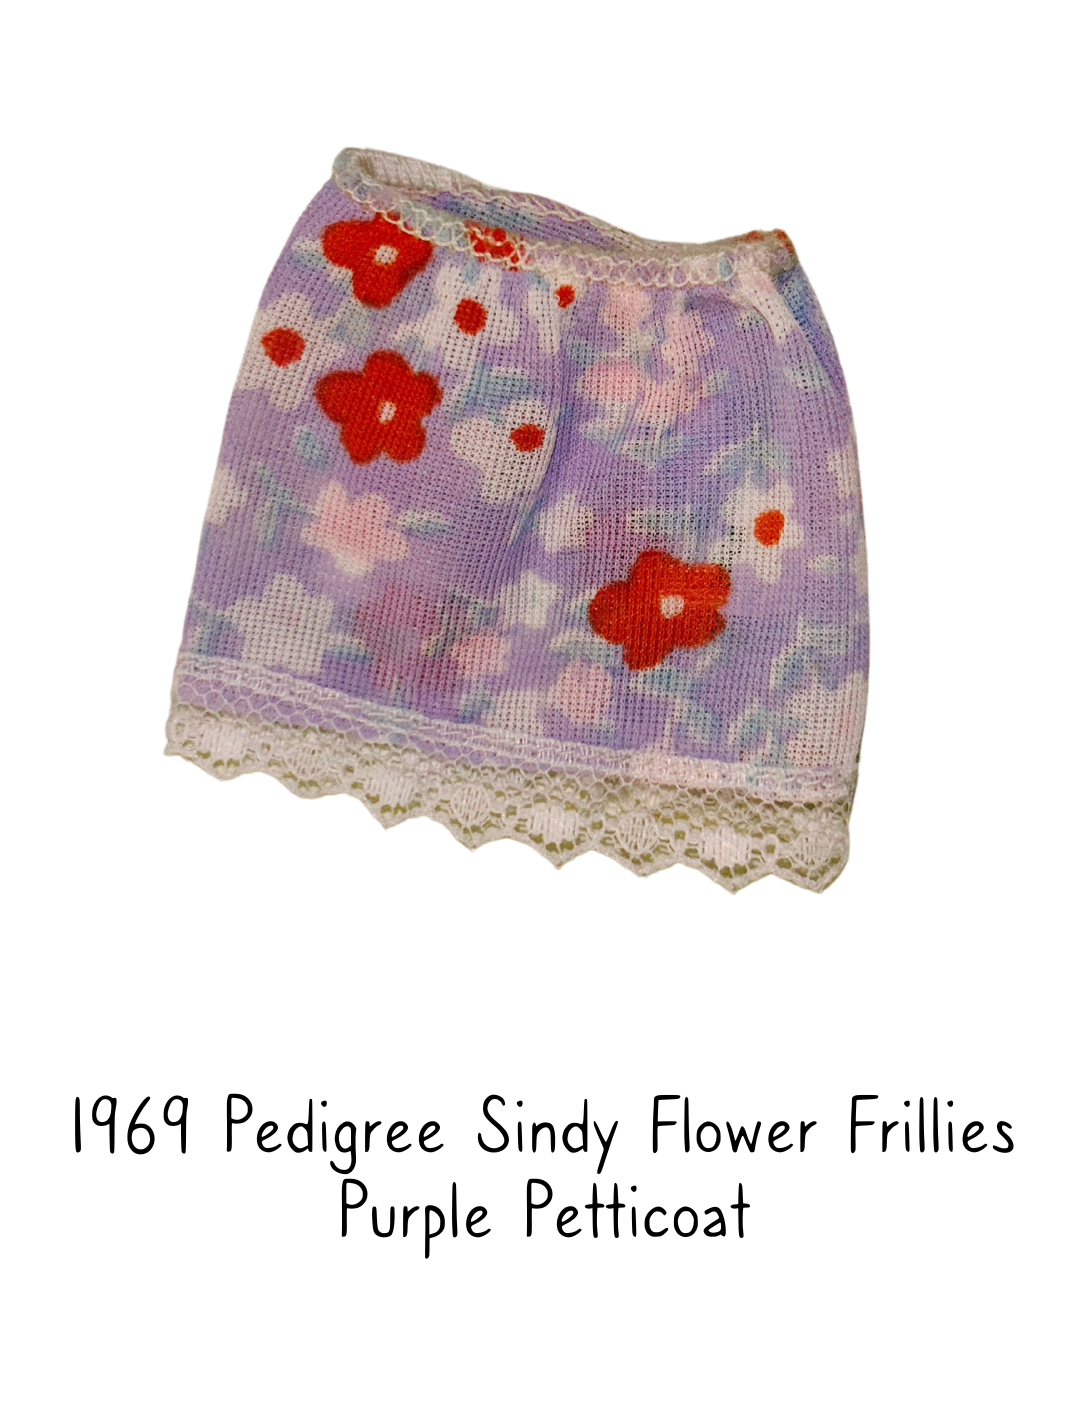 1969 Pedigree Sindy Flower Frillies Purple Petticoat